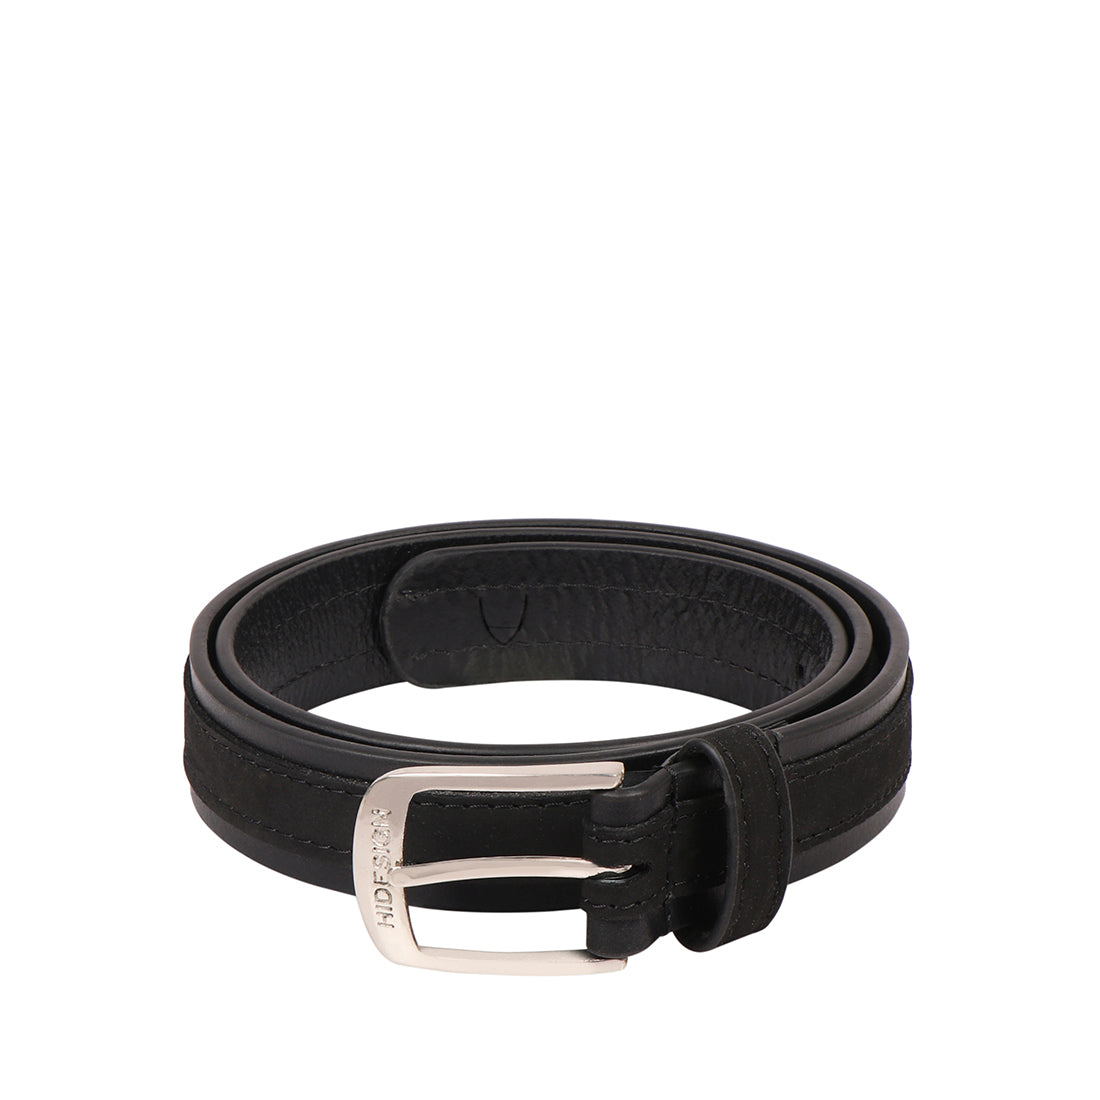 Buy Black Be2206 Mens Belt Online - Hidesign